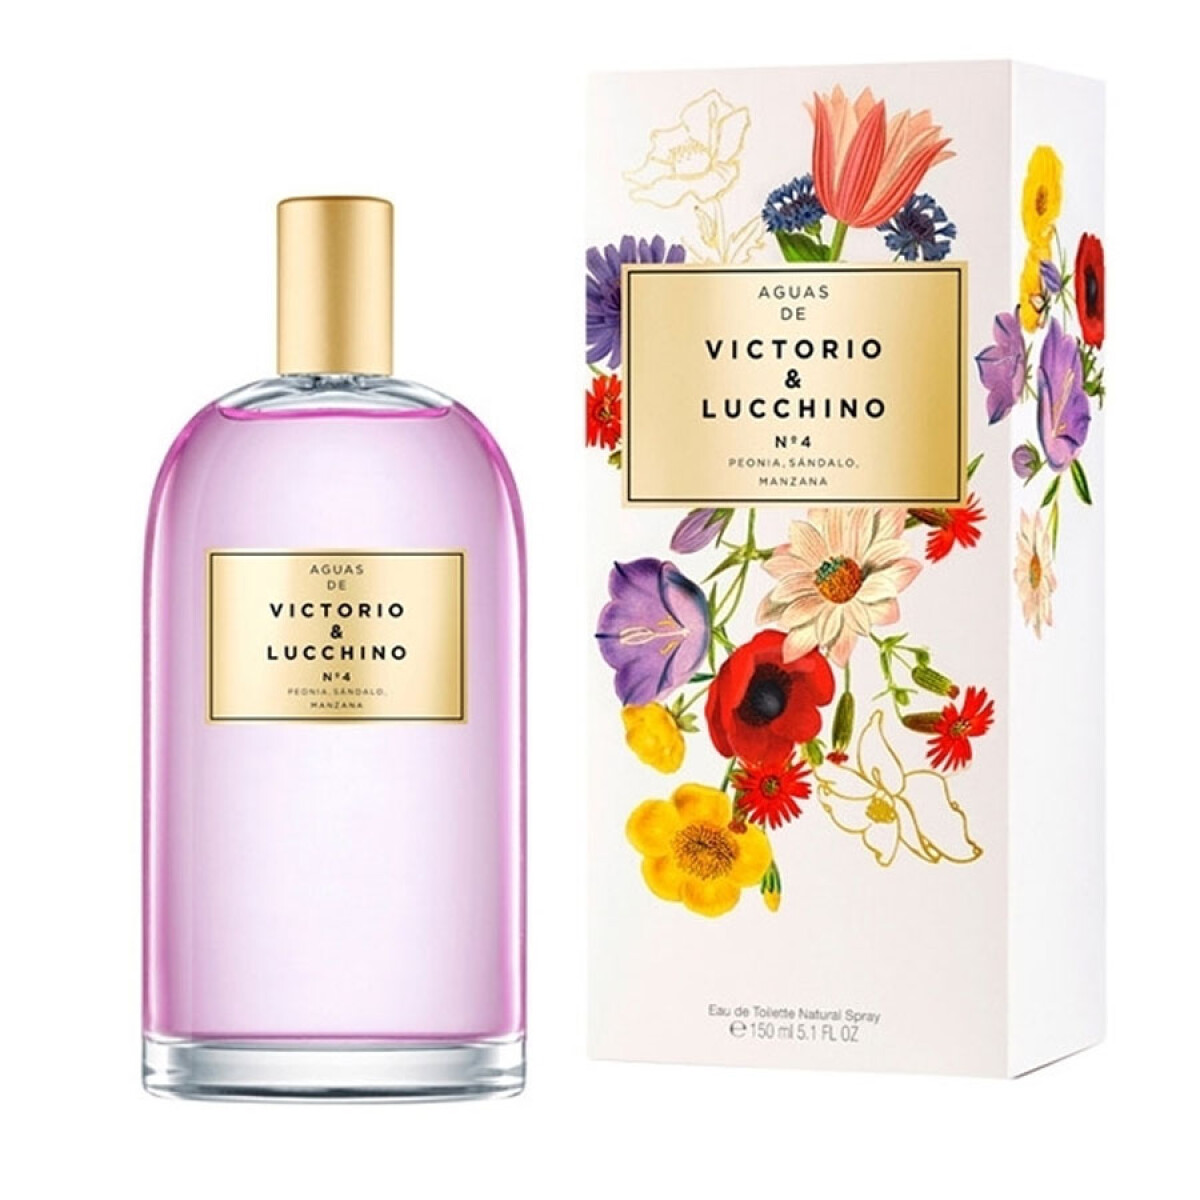 Perfume Vitorio Lucchino Peonia Imperial 150 Ml N4 - 001 